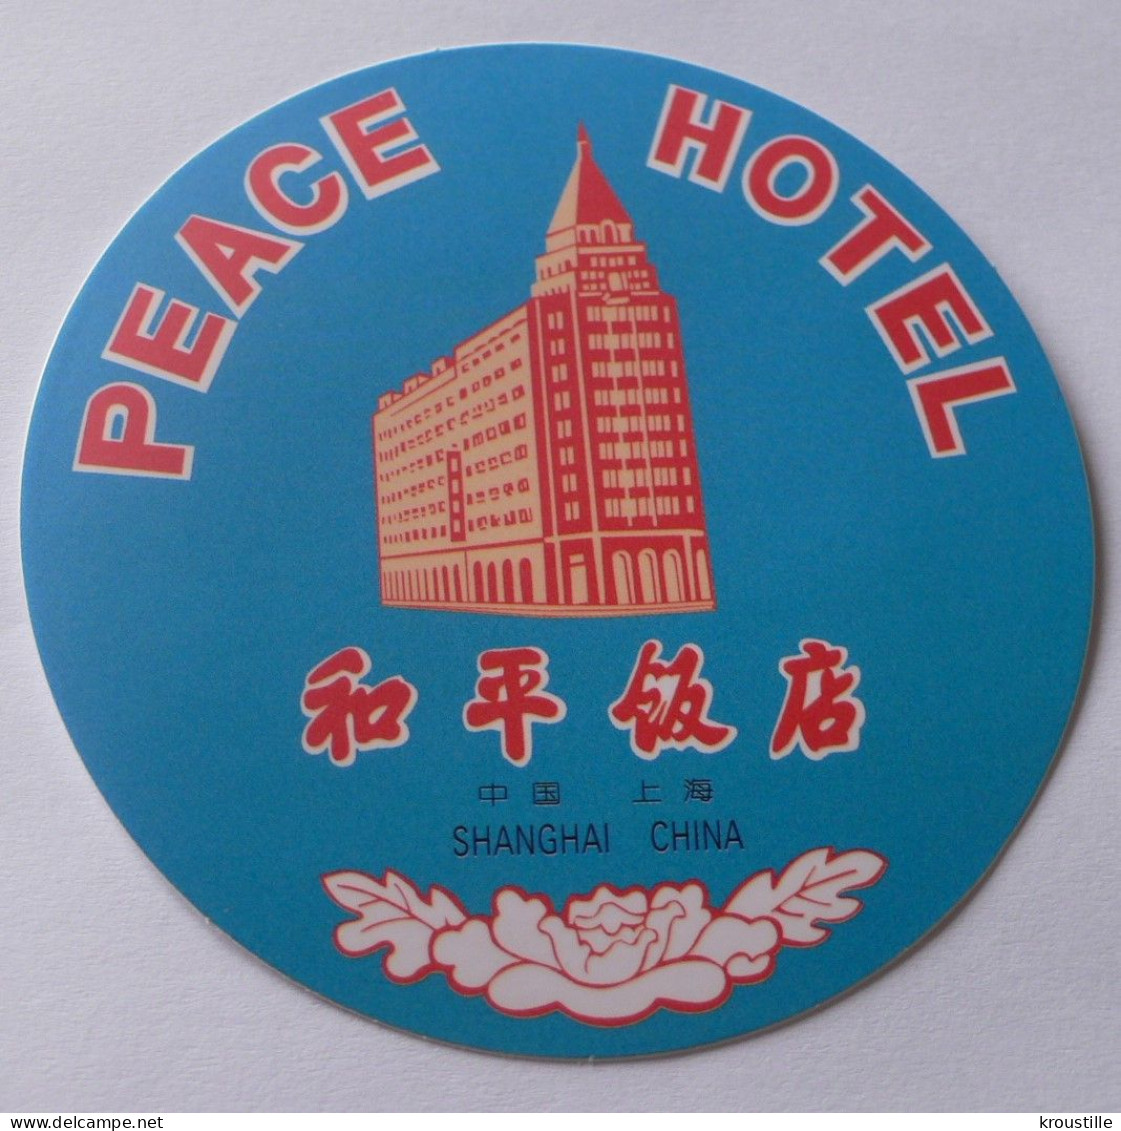 AUTOCOLLANT PEACE HOTEL SHANGAI - Stickers